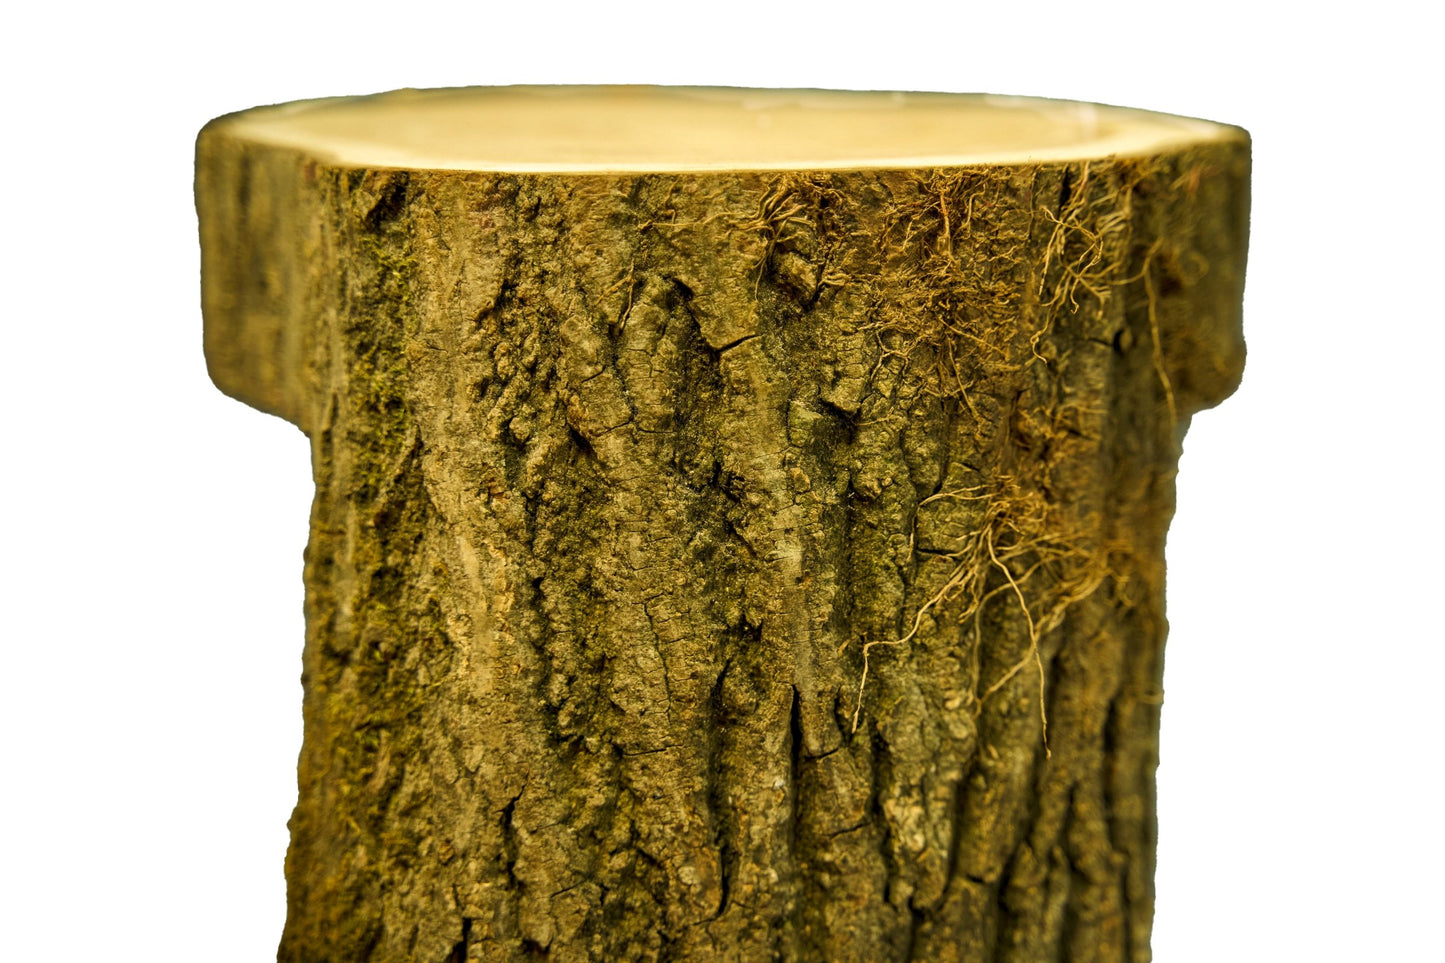 Log stool 2 - alaharasuyafo